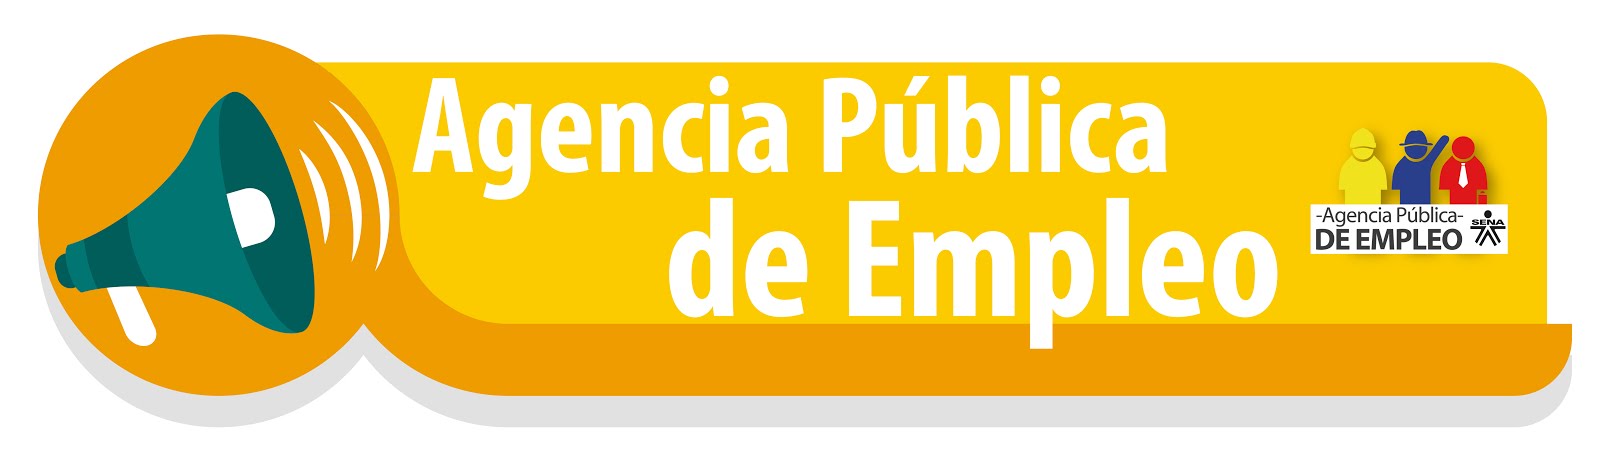 agencia pública de empleo